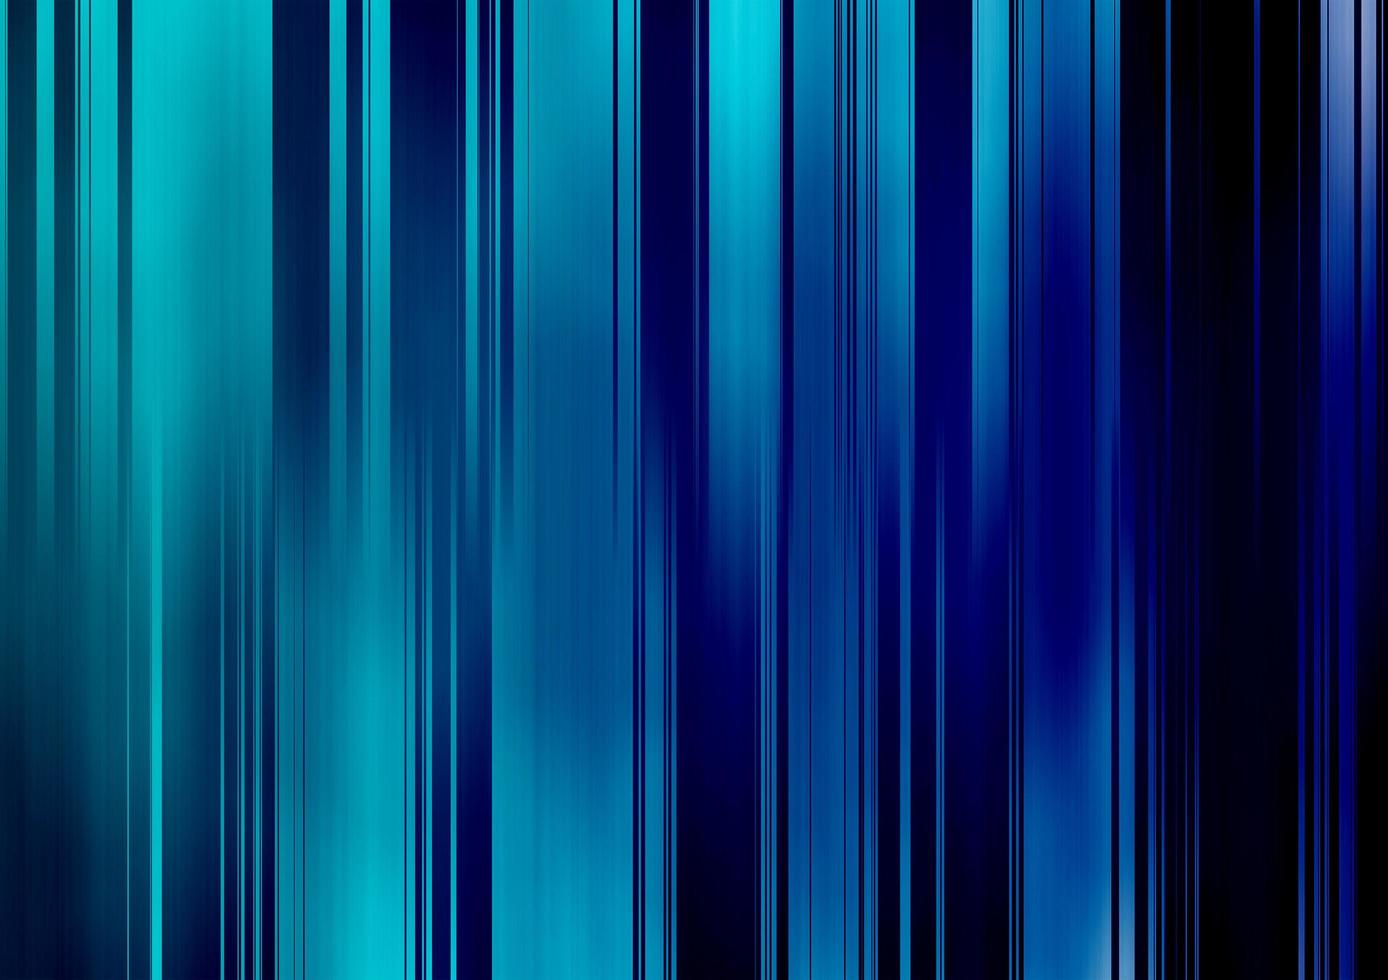 glimmend donker blauw verticaal lineair abstract achtergrond illustratie, spiegel reflectie grafisch concept, beweging, ontwerp voor omslag, folder, poster. foto